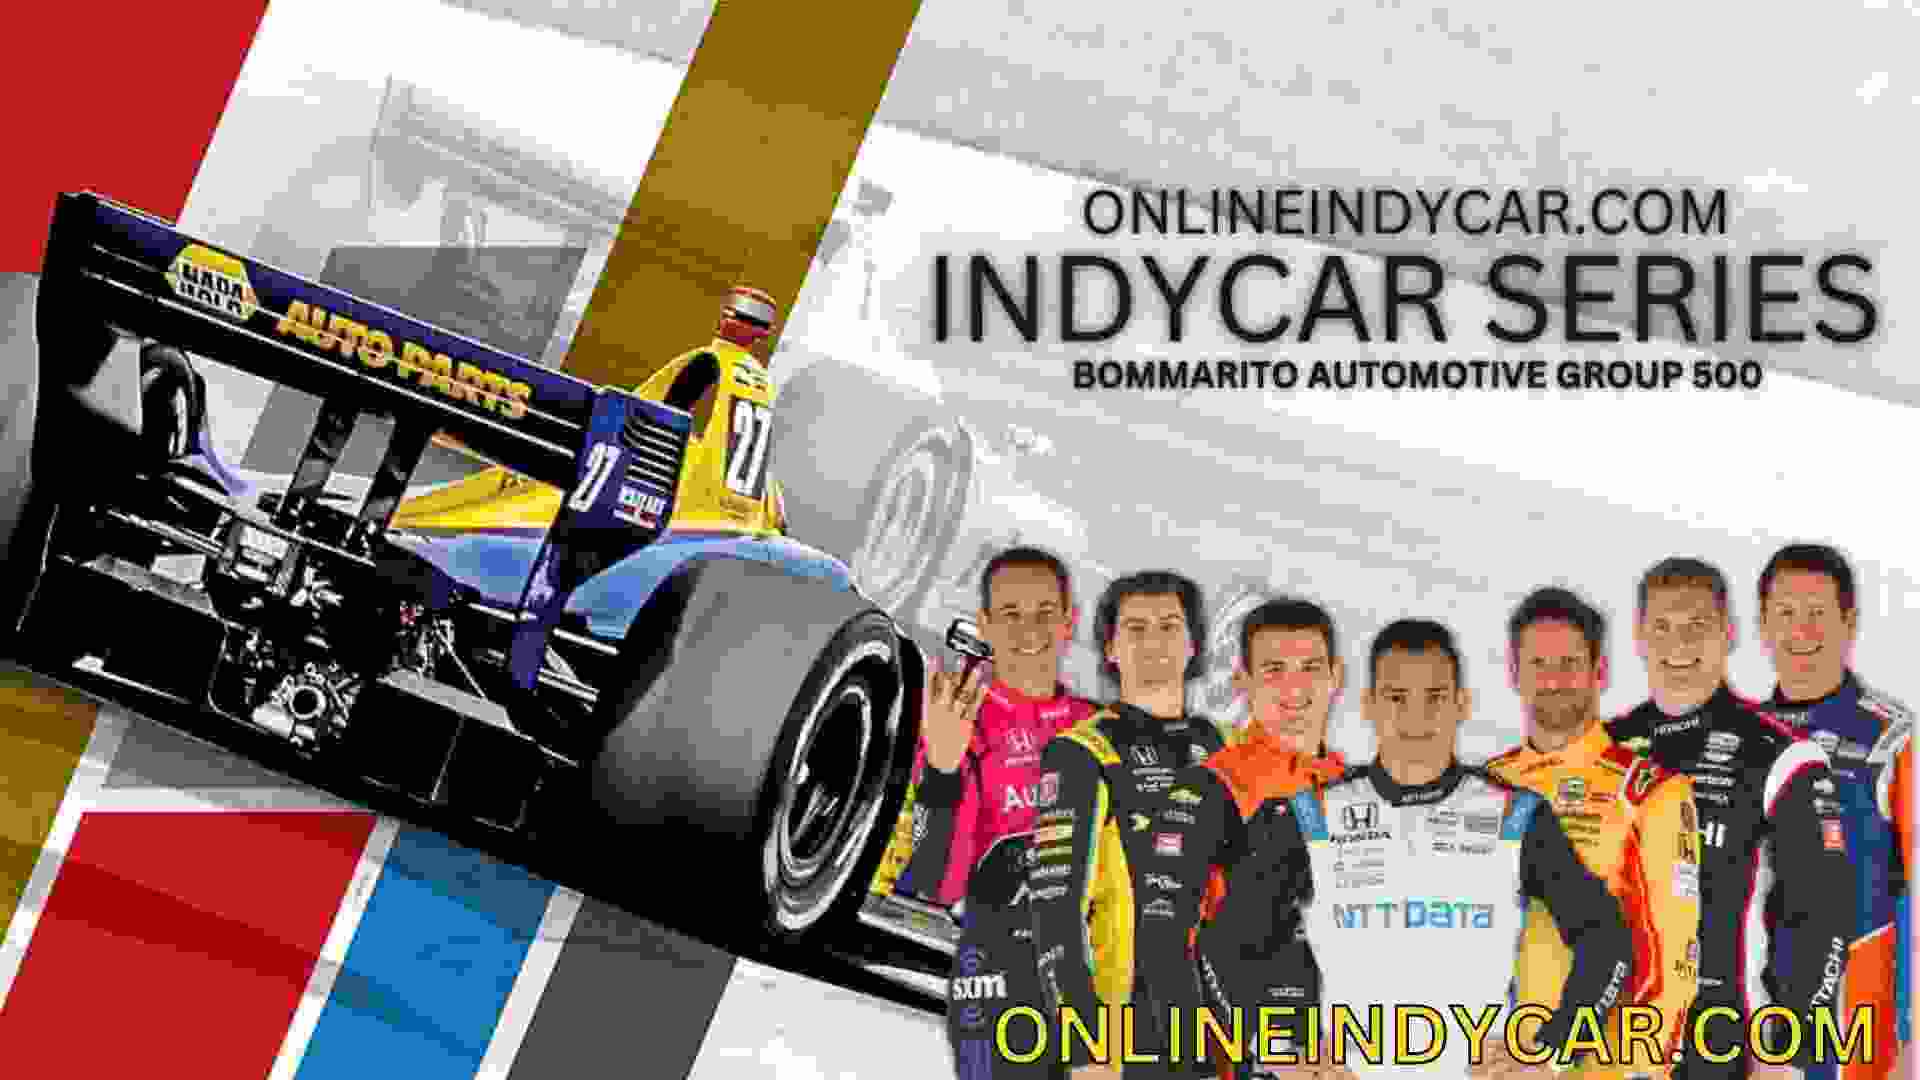 2018 Bommarito Automotive Group 500 IndyCar Live Stream